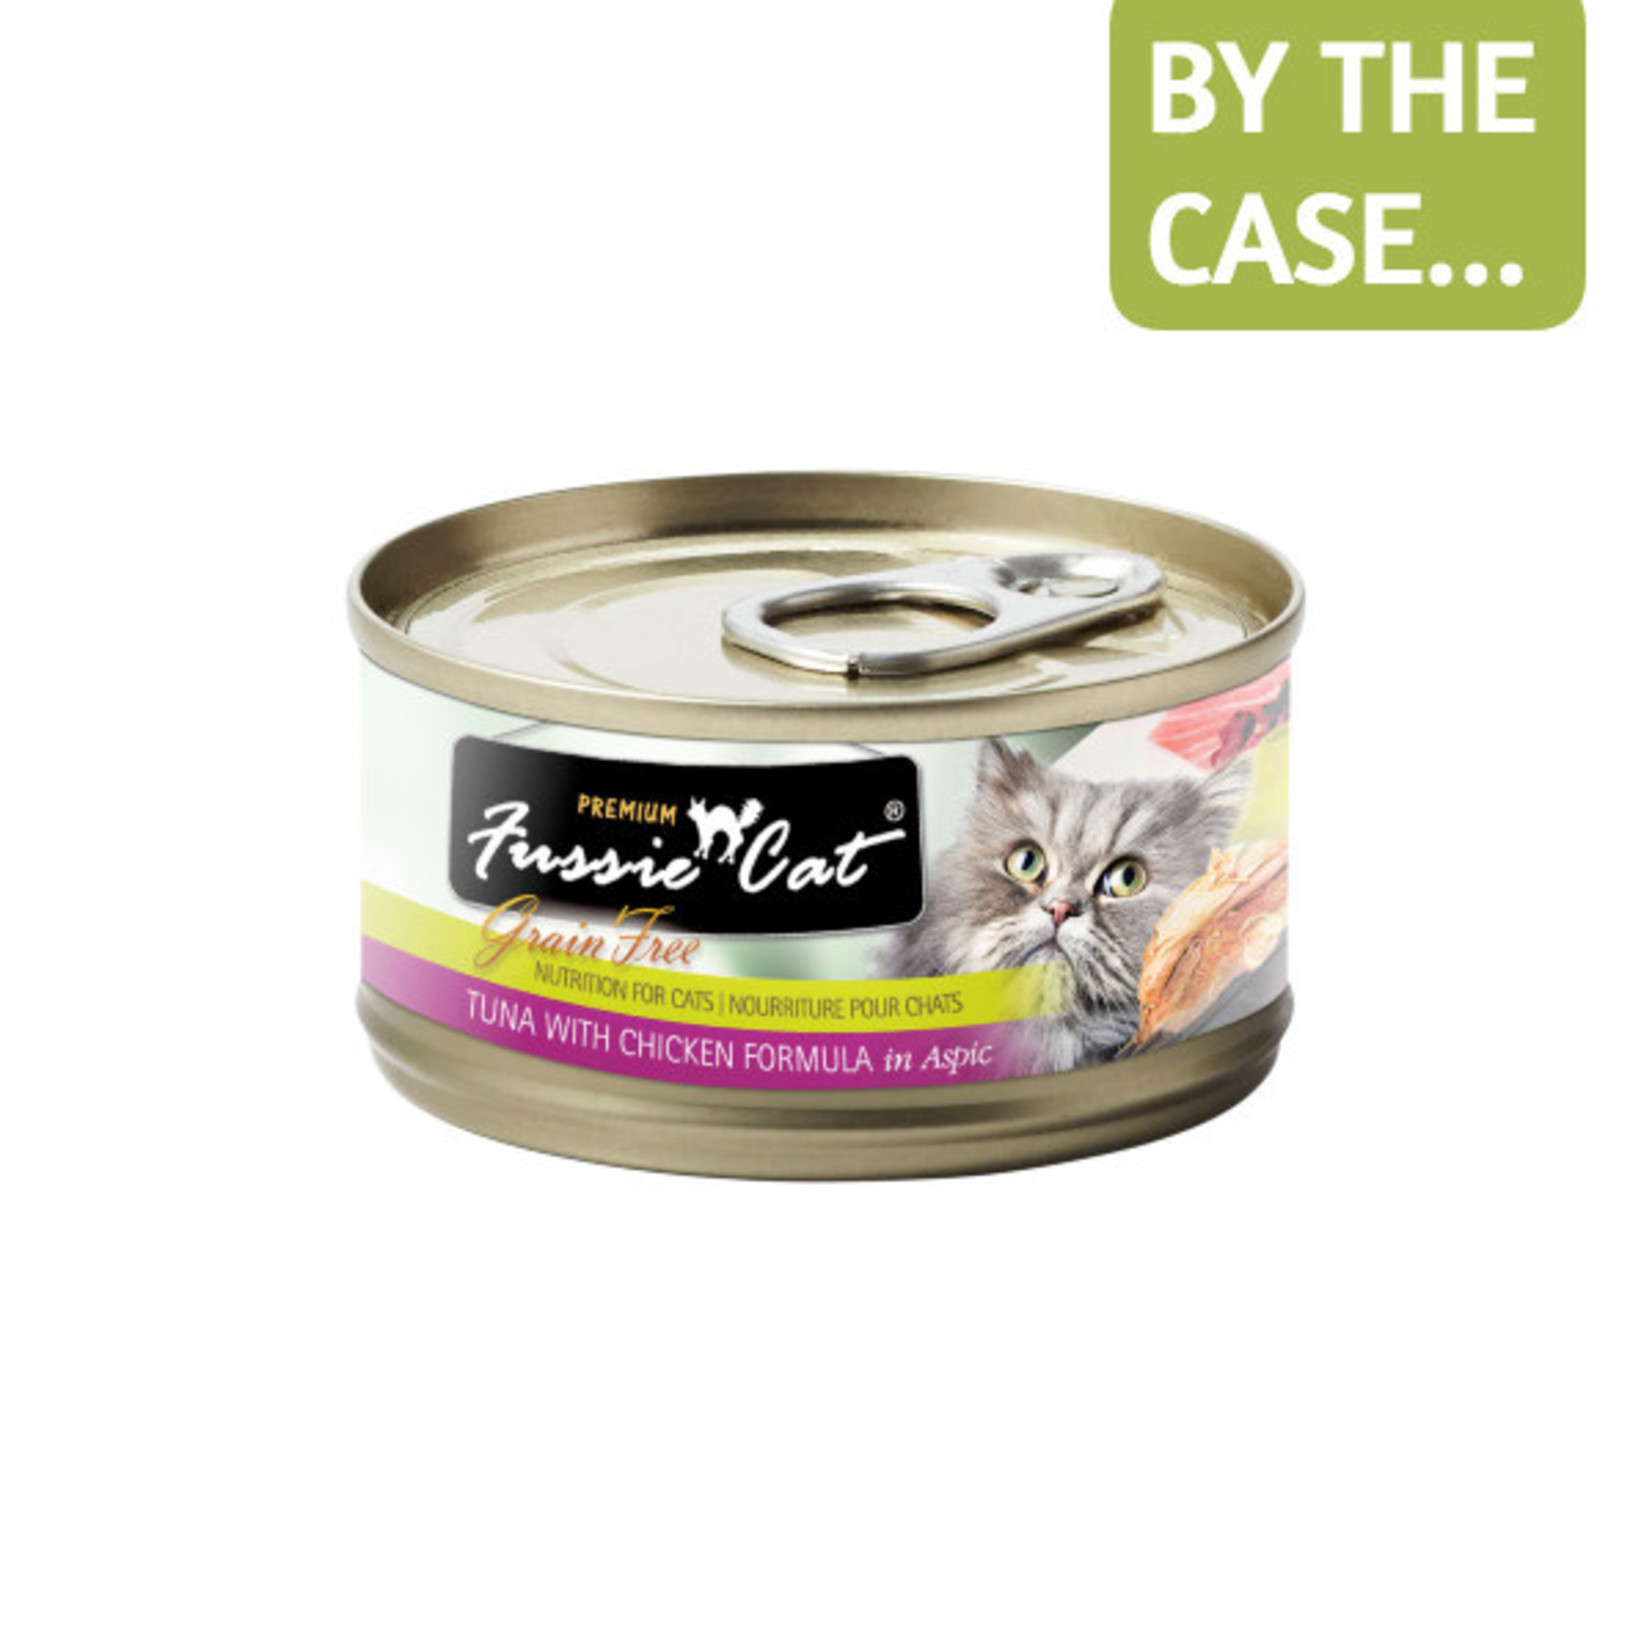 Fussie Cat Fussie Cat Wet Cat Food Tuna with Chicken Formula in Aspic 2.8oz Can Grain Free